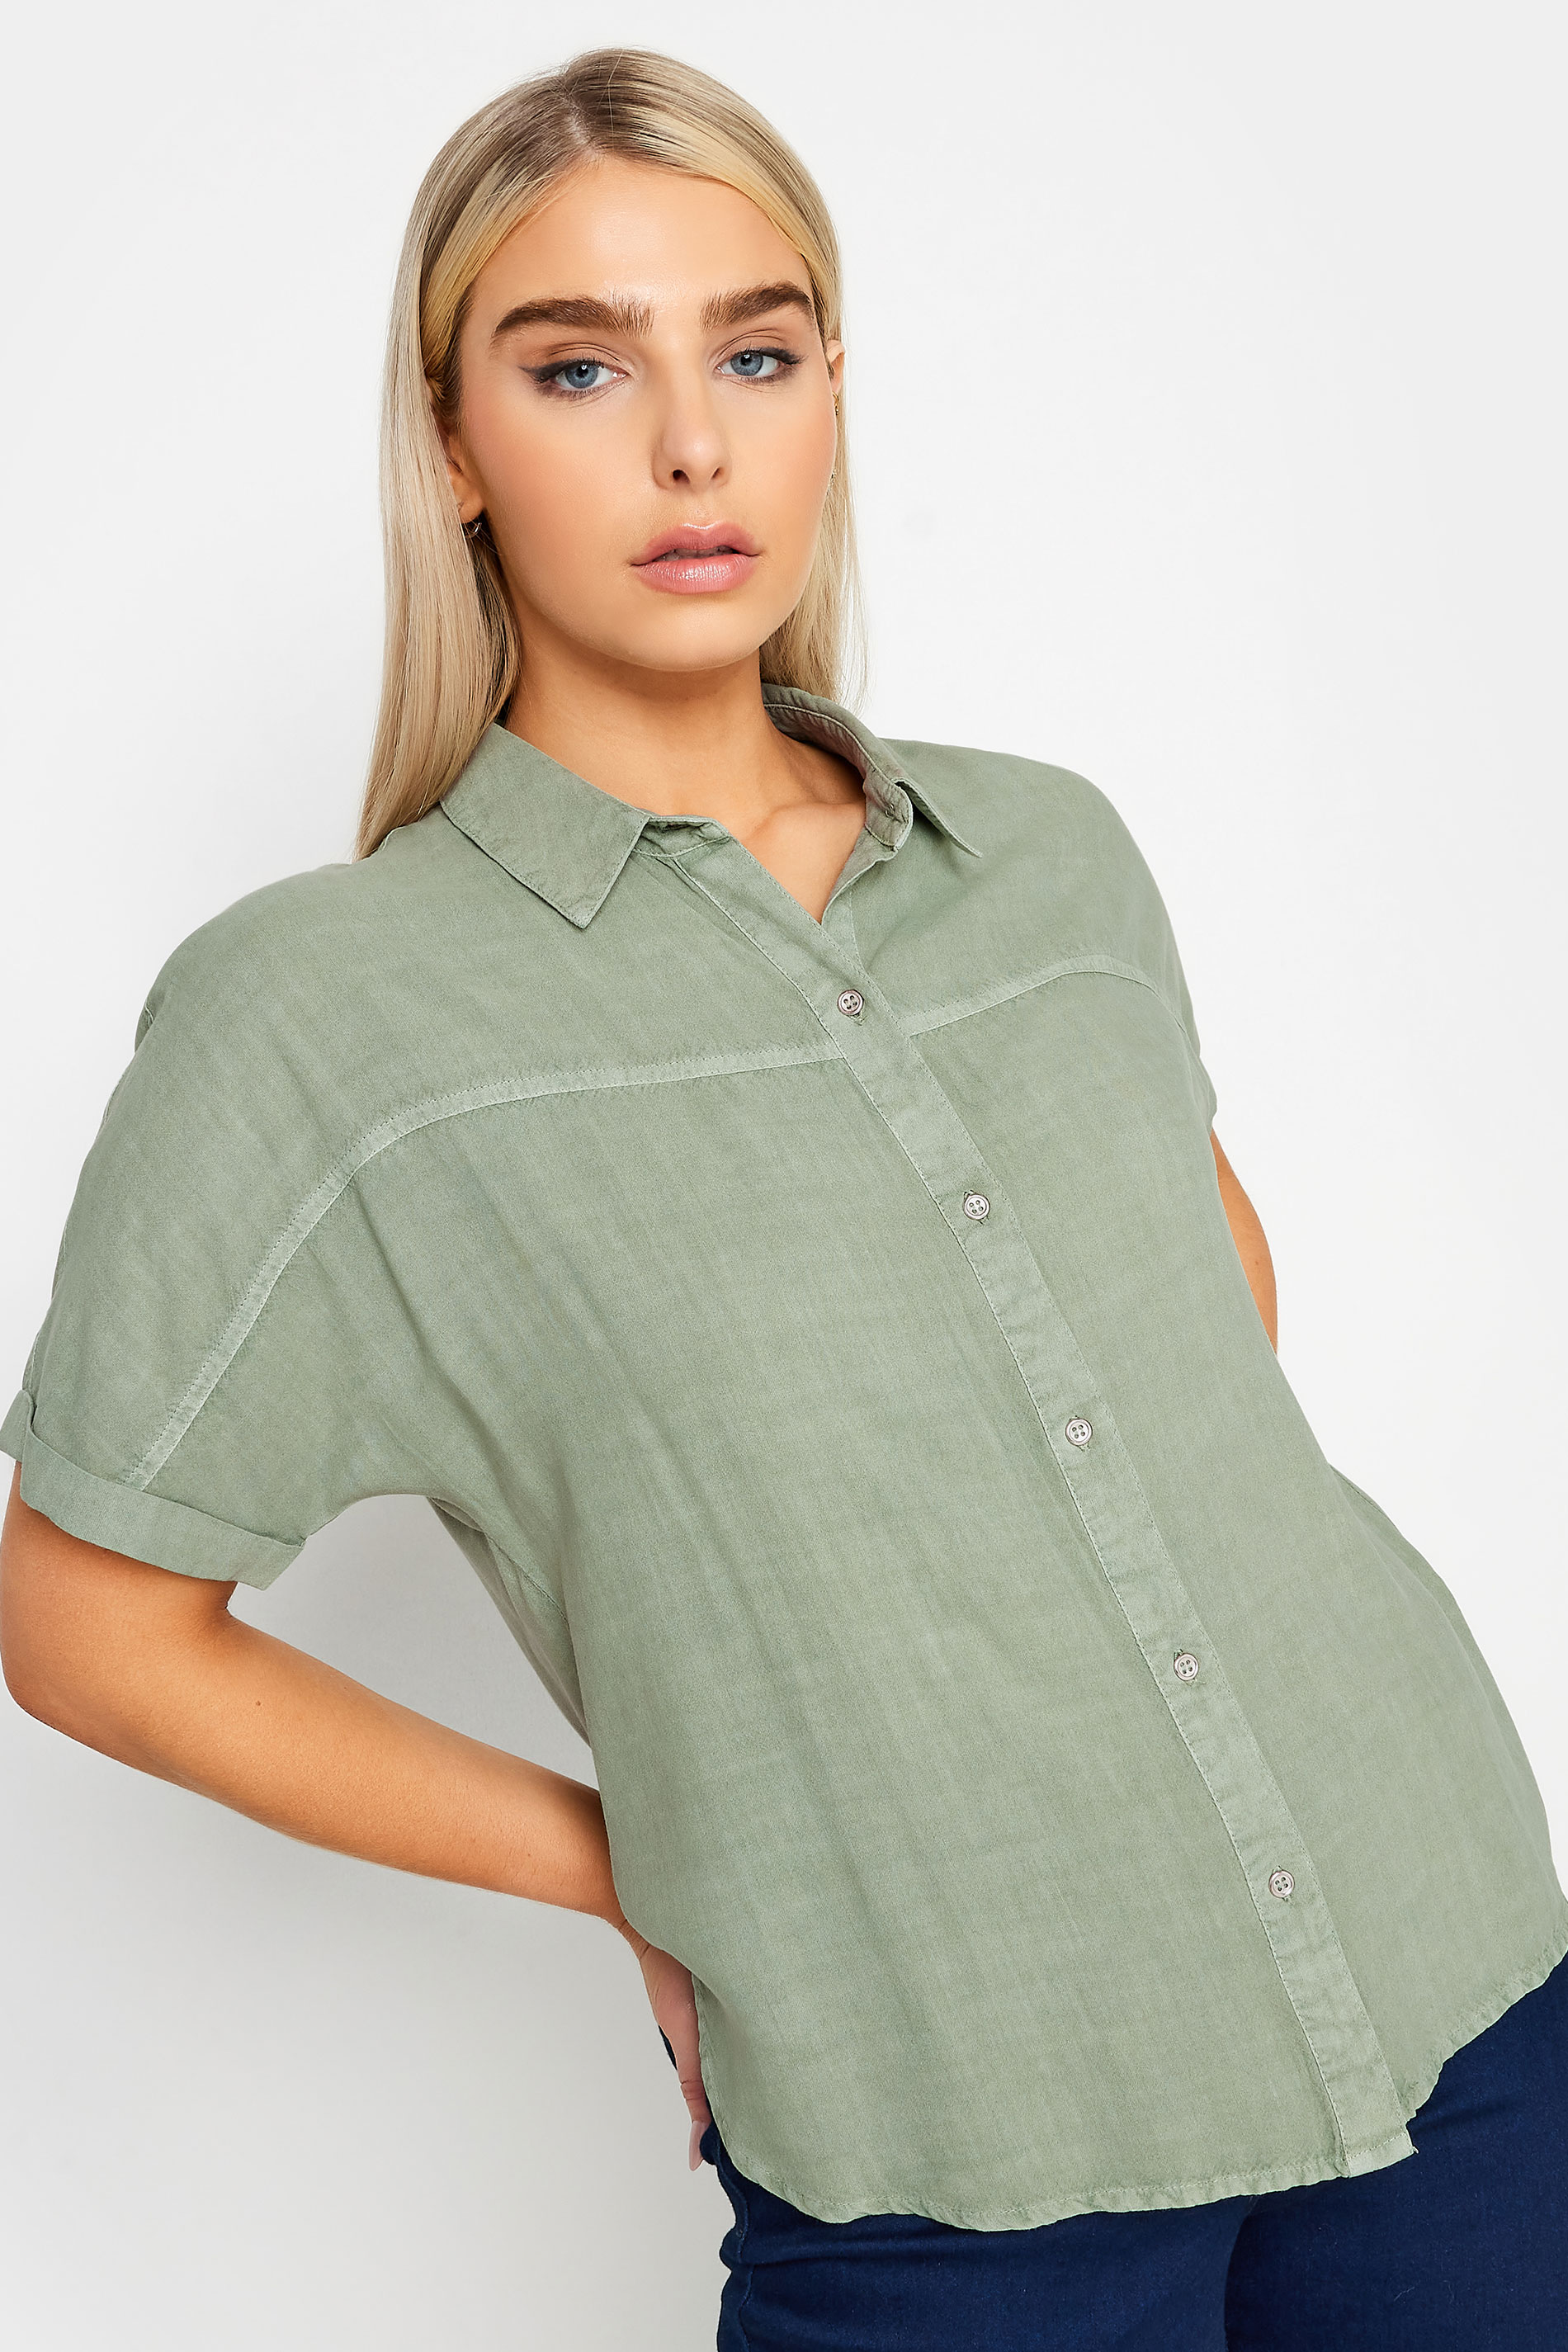 M&Co Sage Green Short Sleeve Shirt | M&Co 1